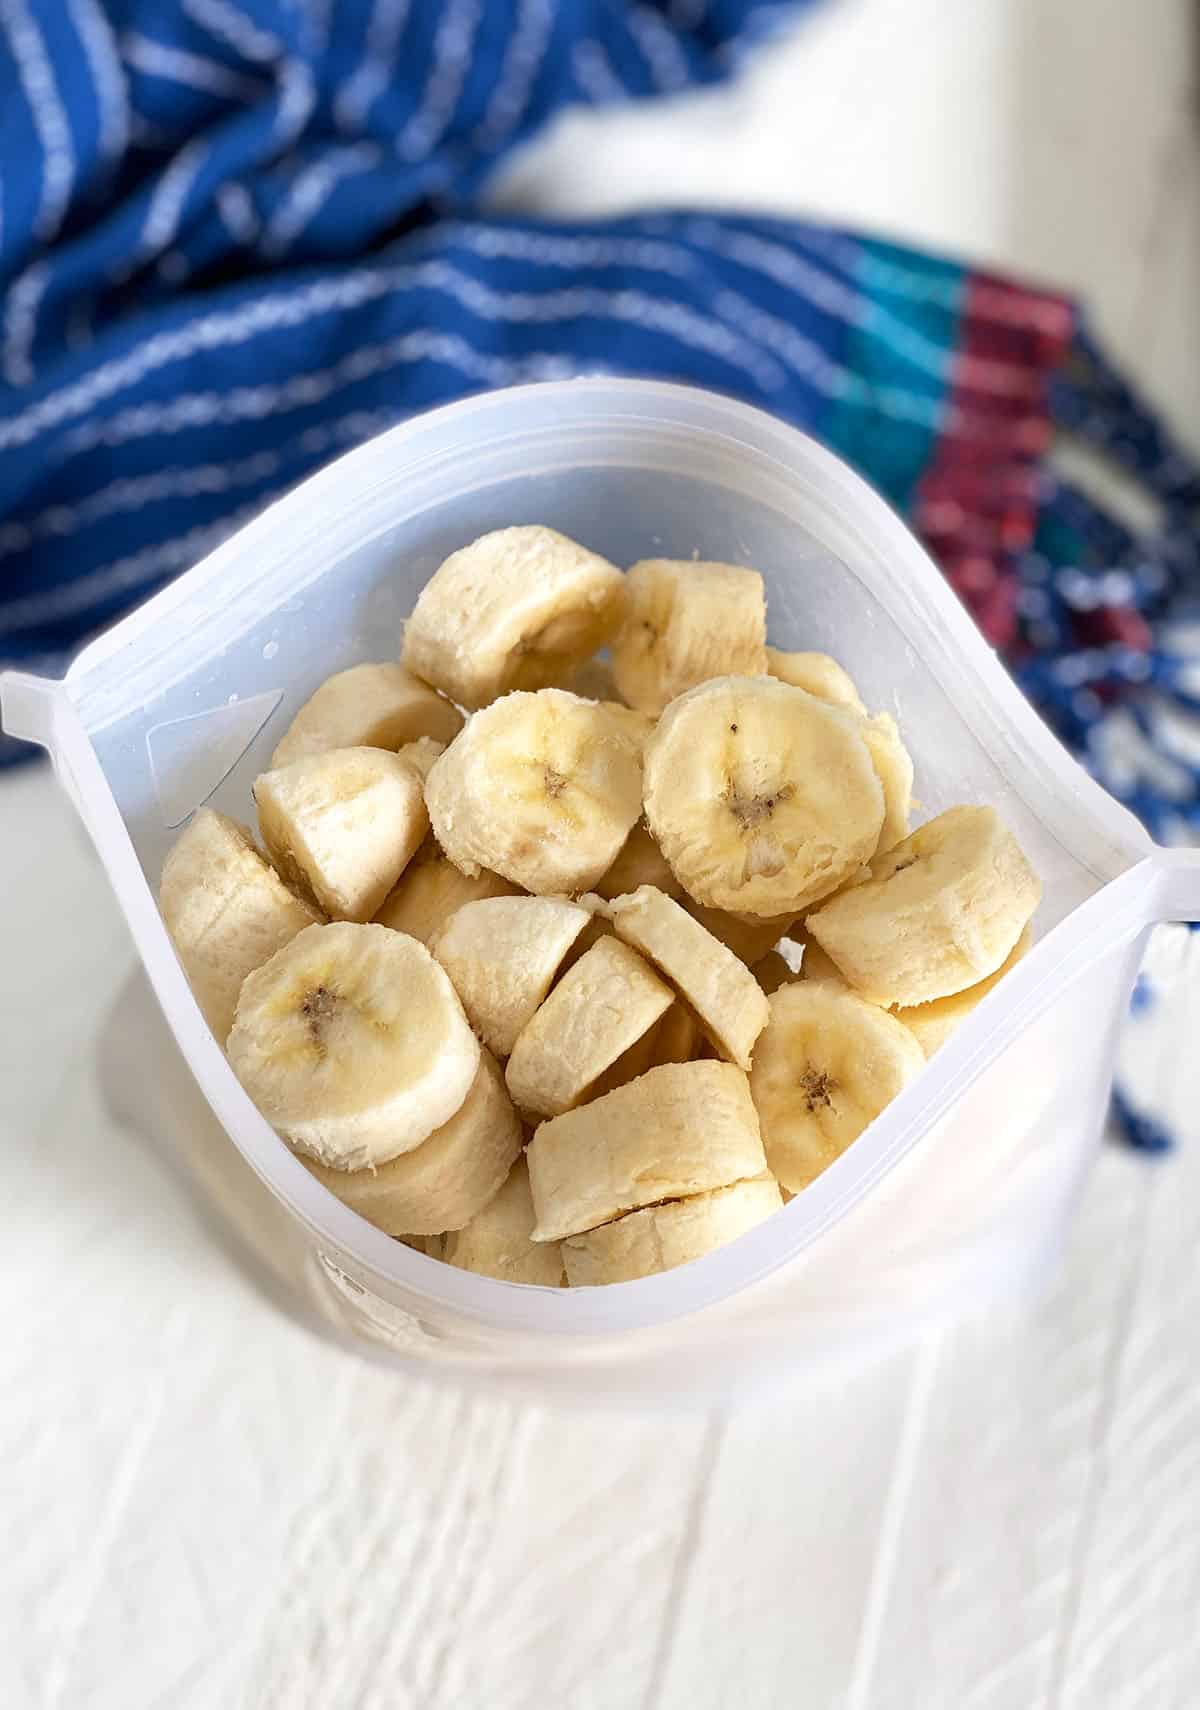 A reusable ziptop bag is open, showing a serving of sliced frozen bananas.